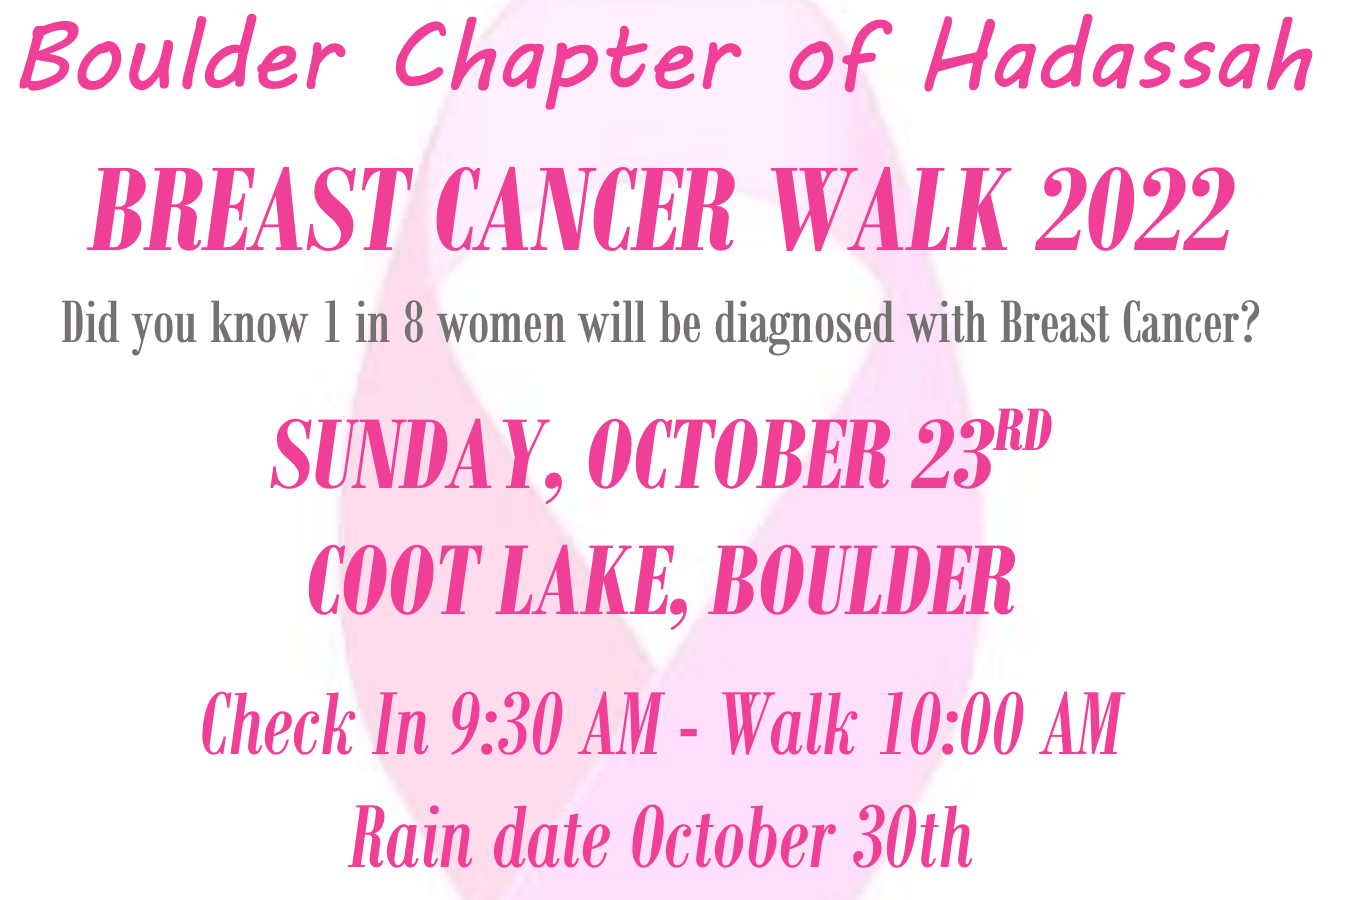 Boulder Chapter of Hadassah Breast Cancer Walk 2022